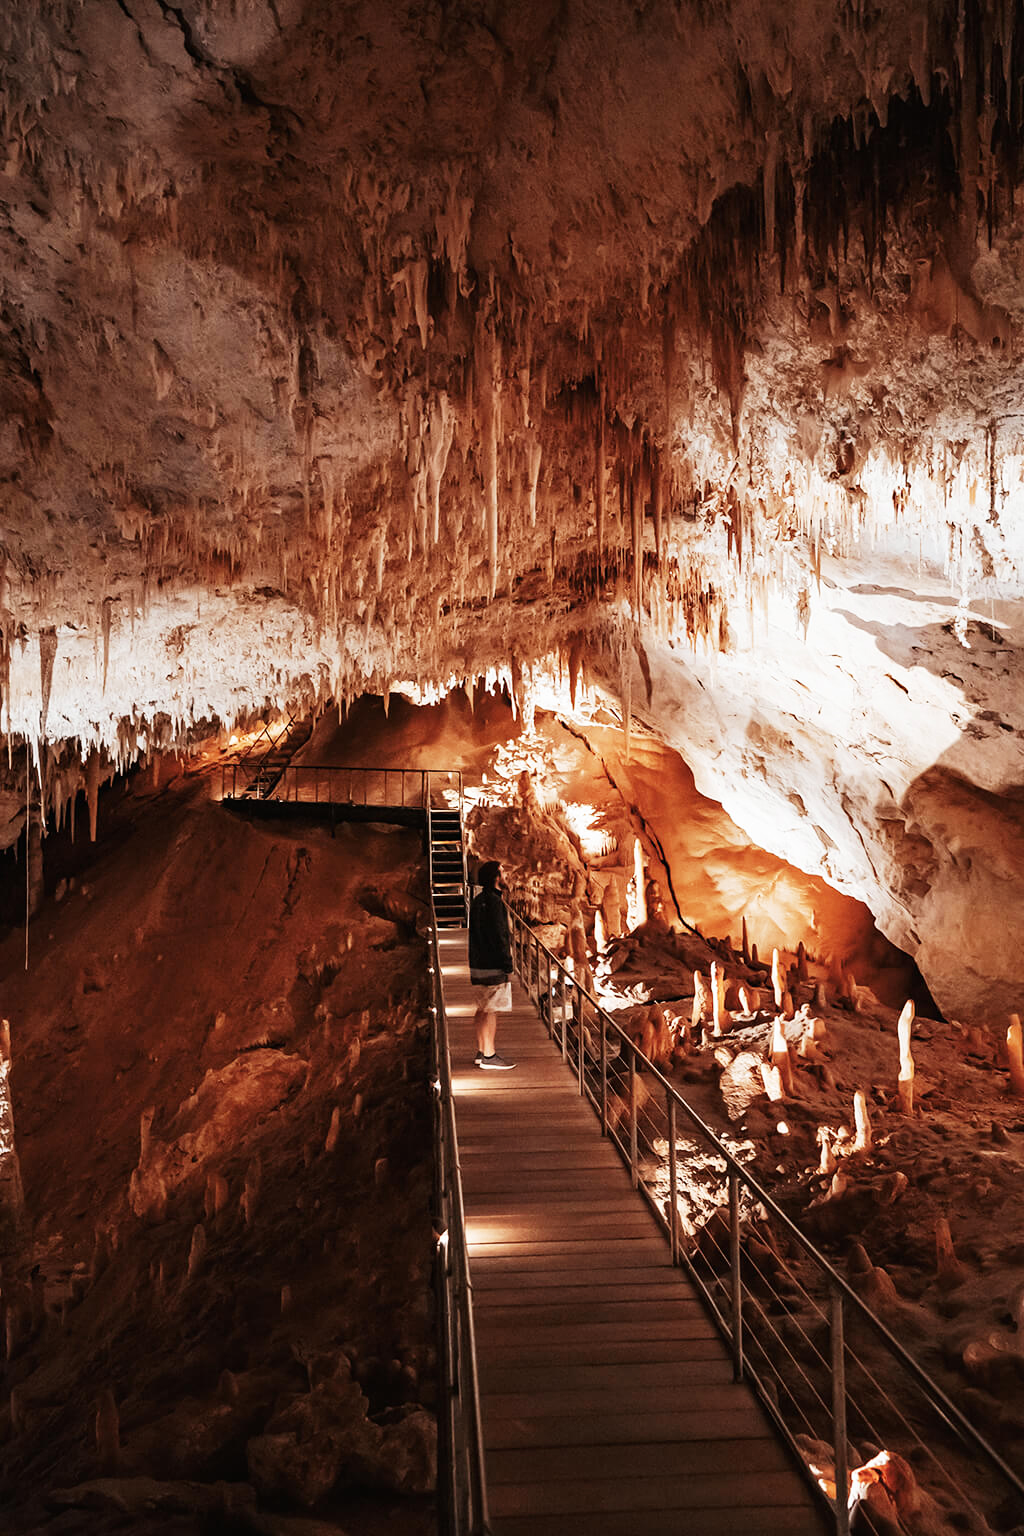 Man watching Margaret River's Underground Cave stalactites and stalagmites in Western Australia